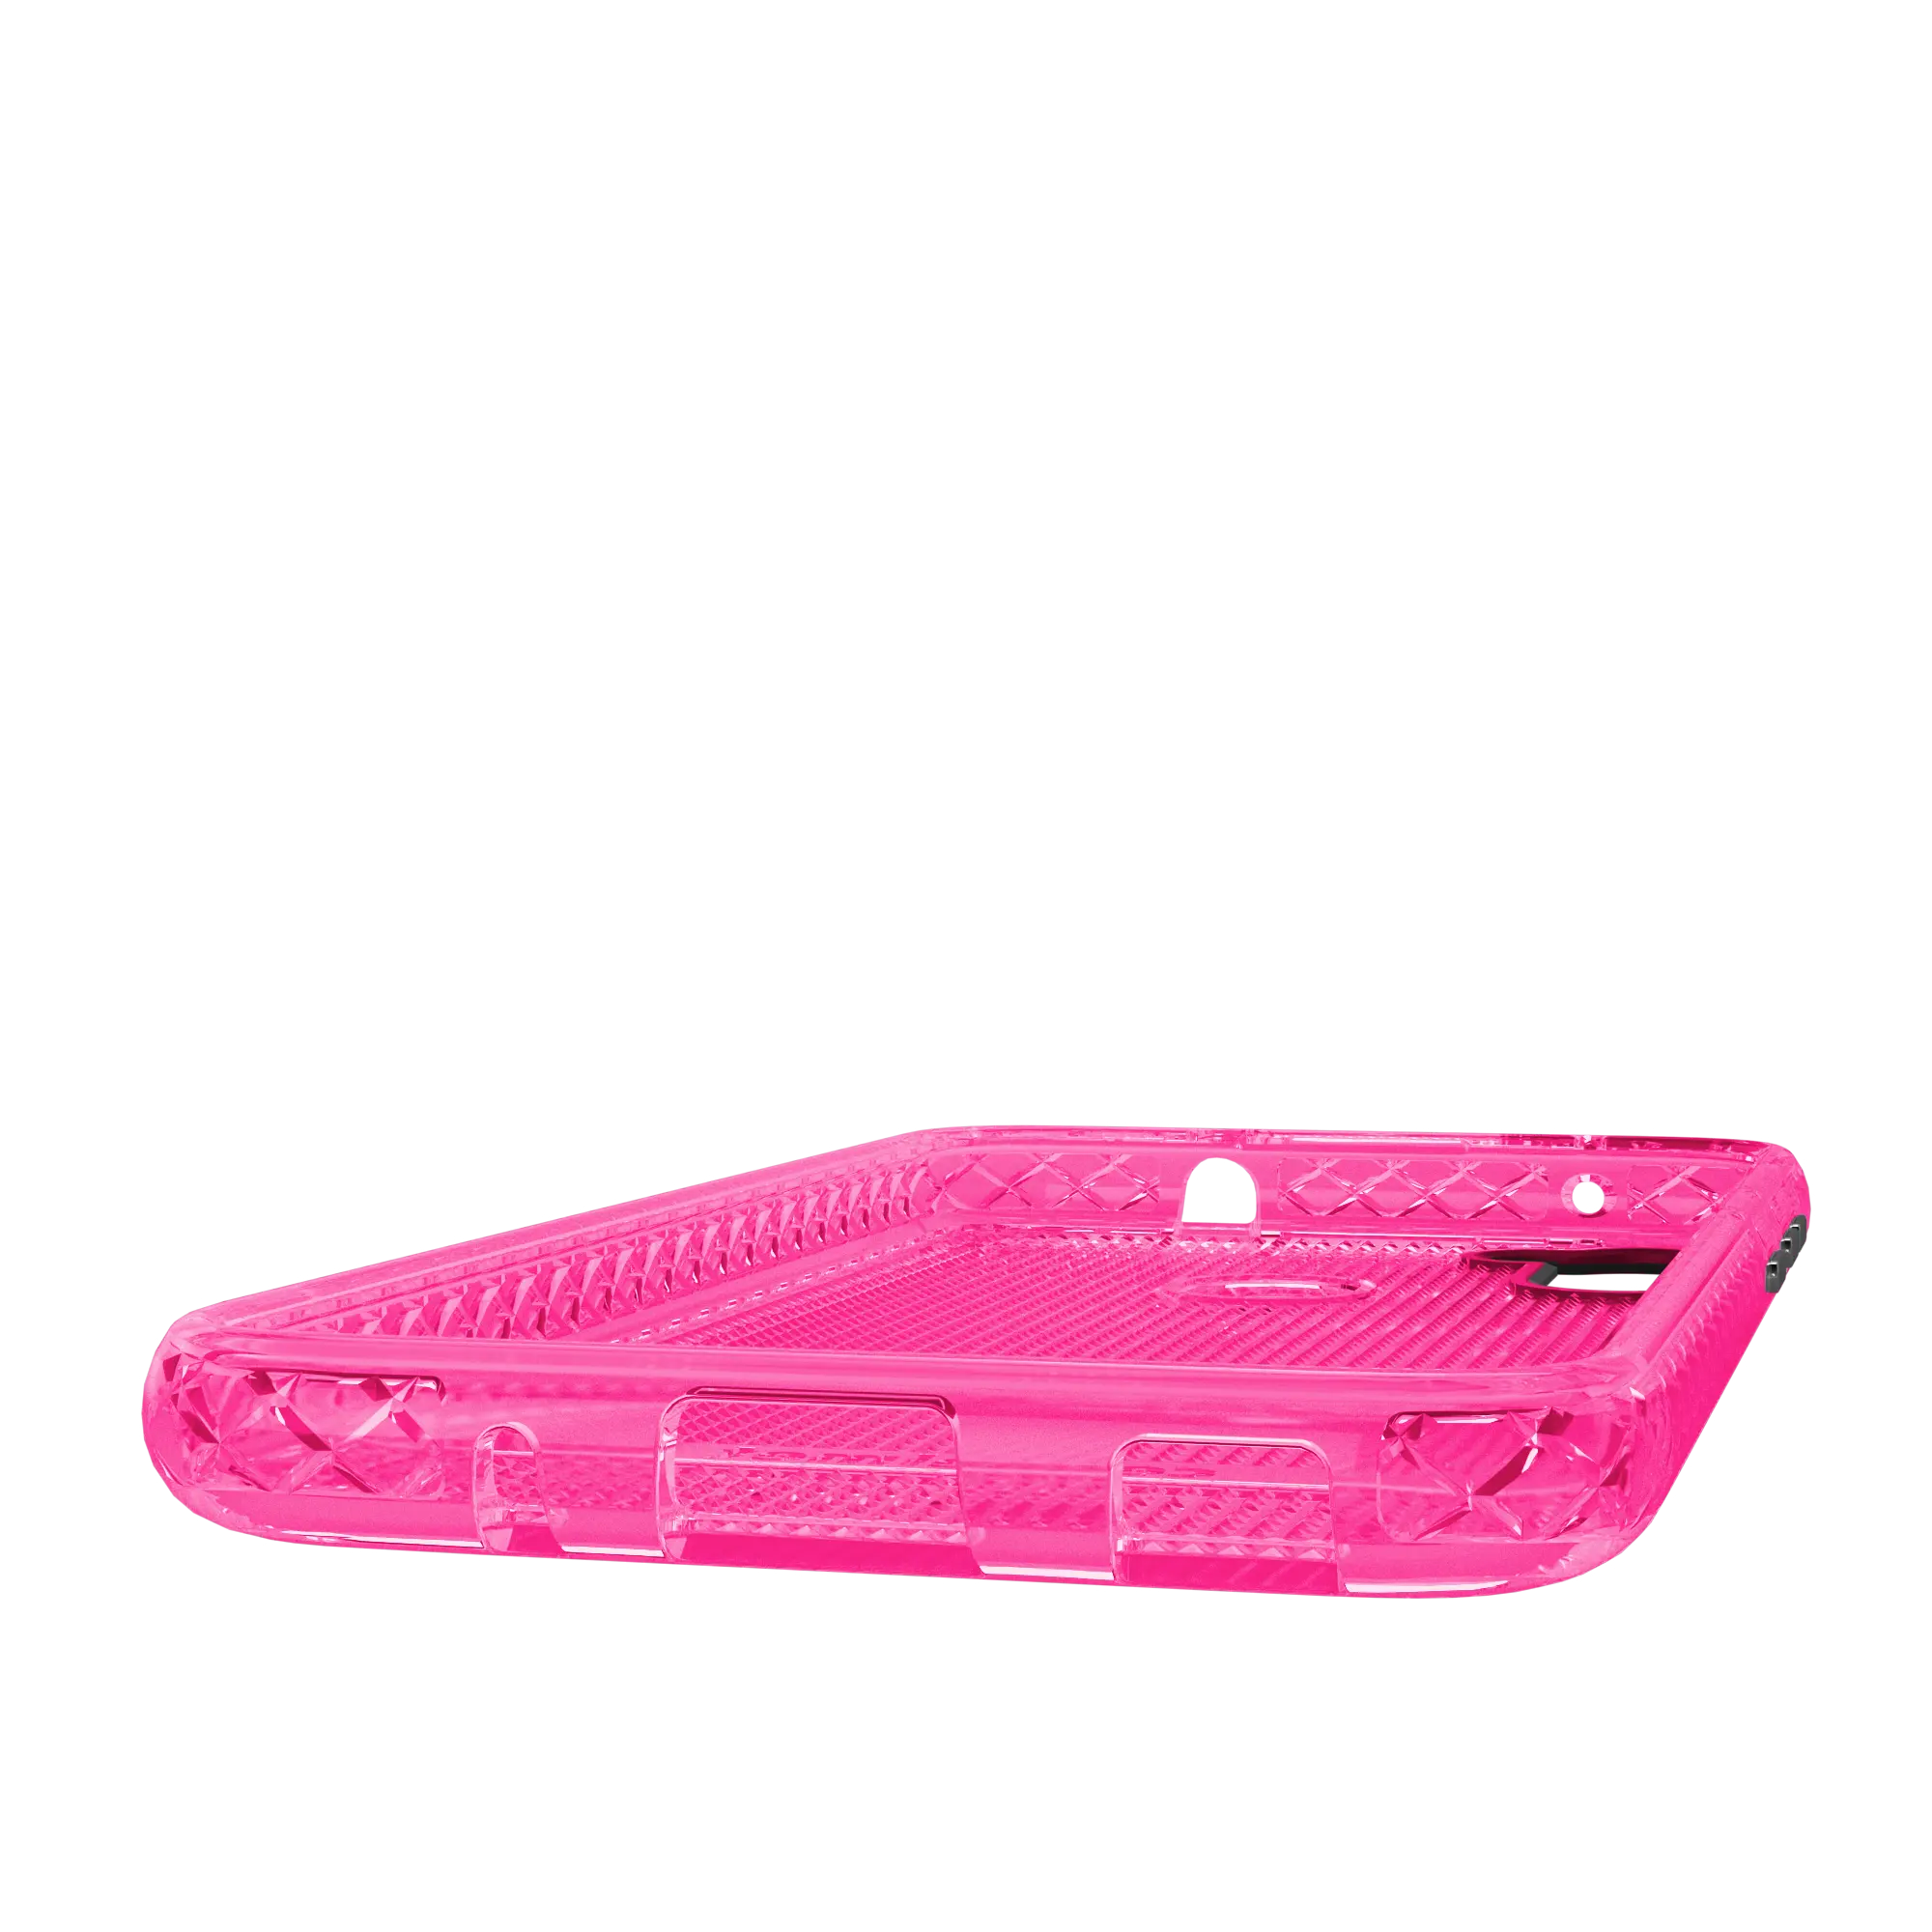 Altitude X Series for Samsung Galaxy S21 Plus  - Pink - Case -  - cellhelmet